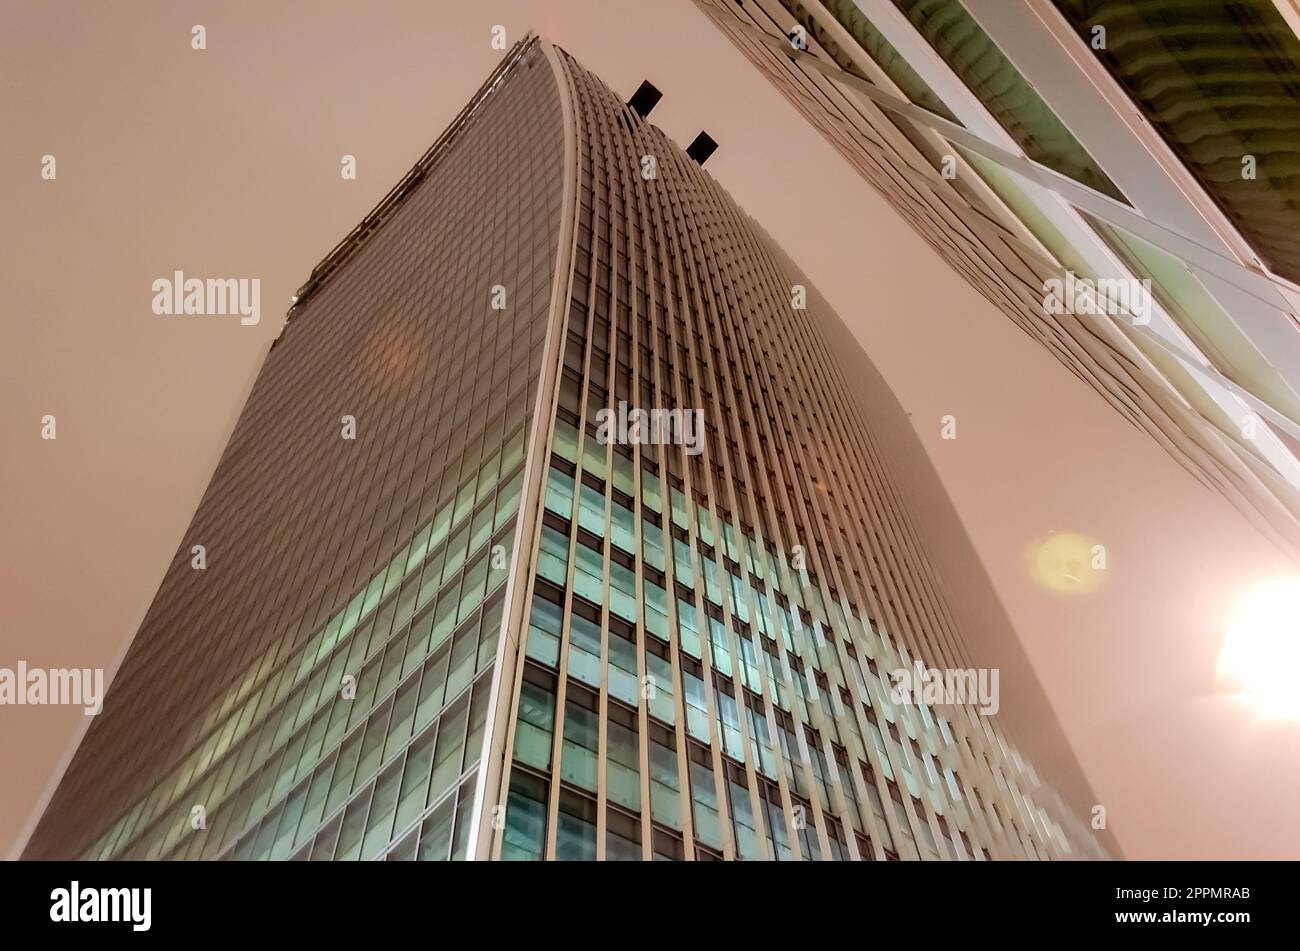 20 Fenchurch street, aka Walkie Talkie Tower, London, UK Stock Photo